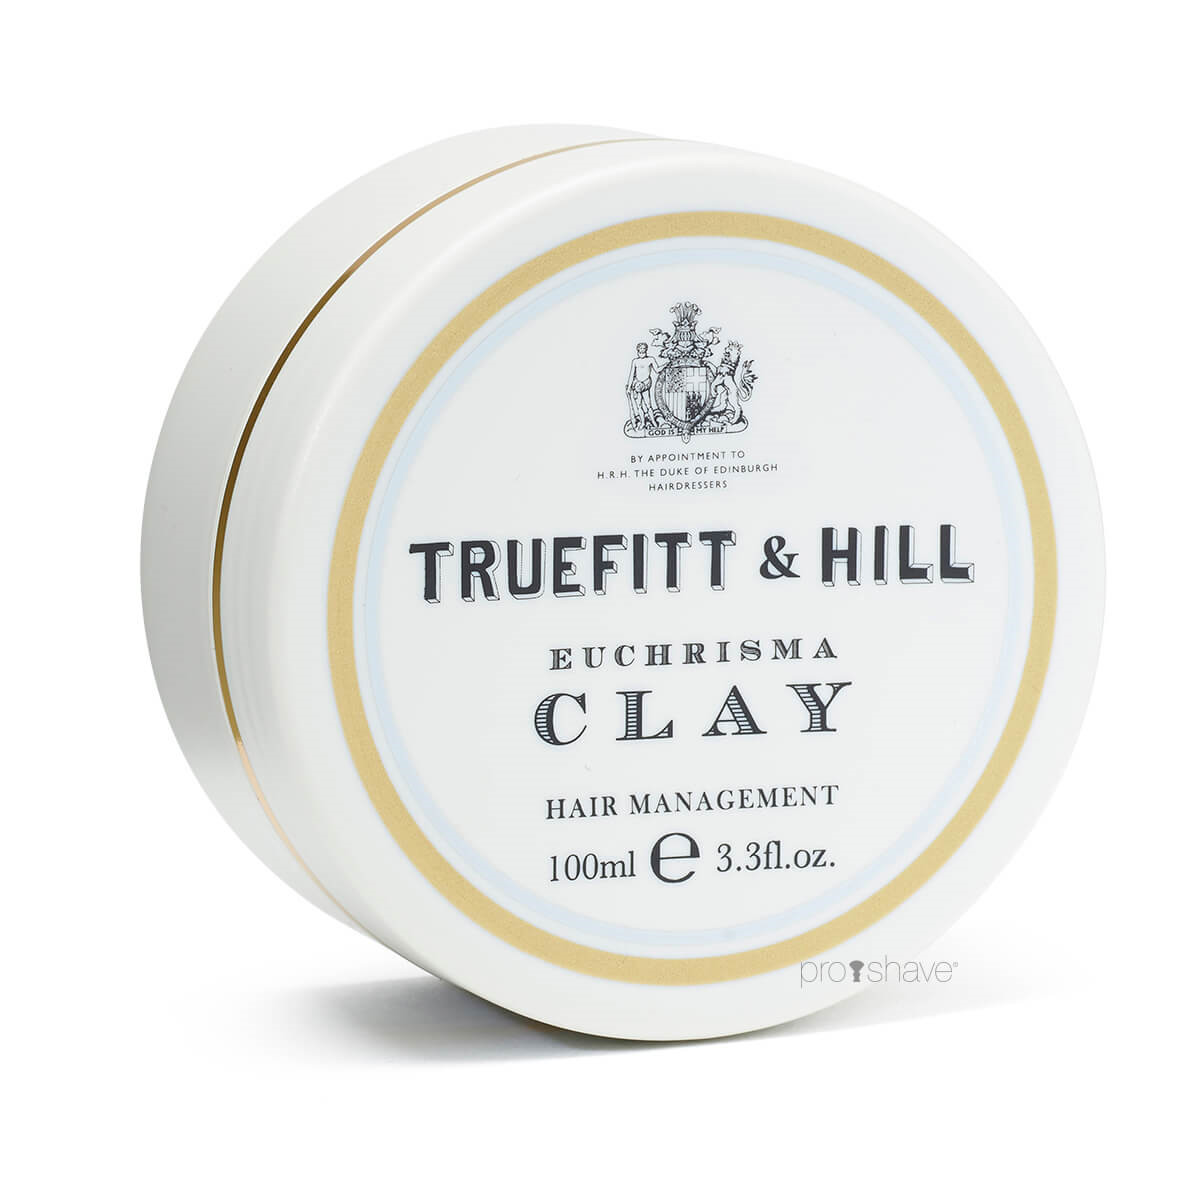 Se Truefitt & Hill Hair Management Euchrisma Clay (100 ml) hos Proshave